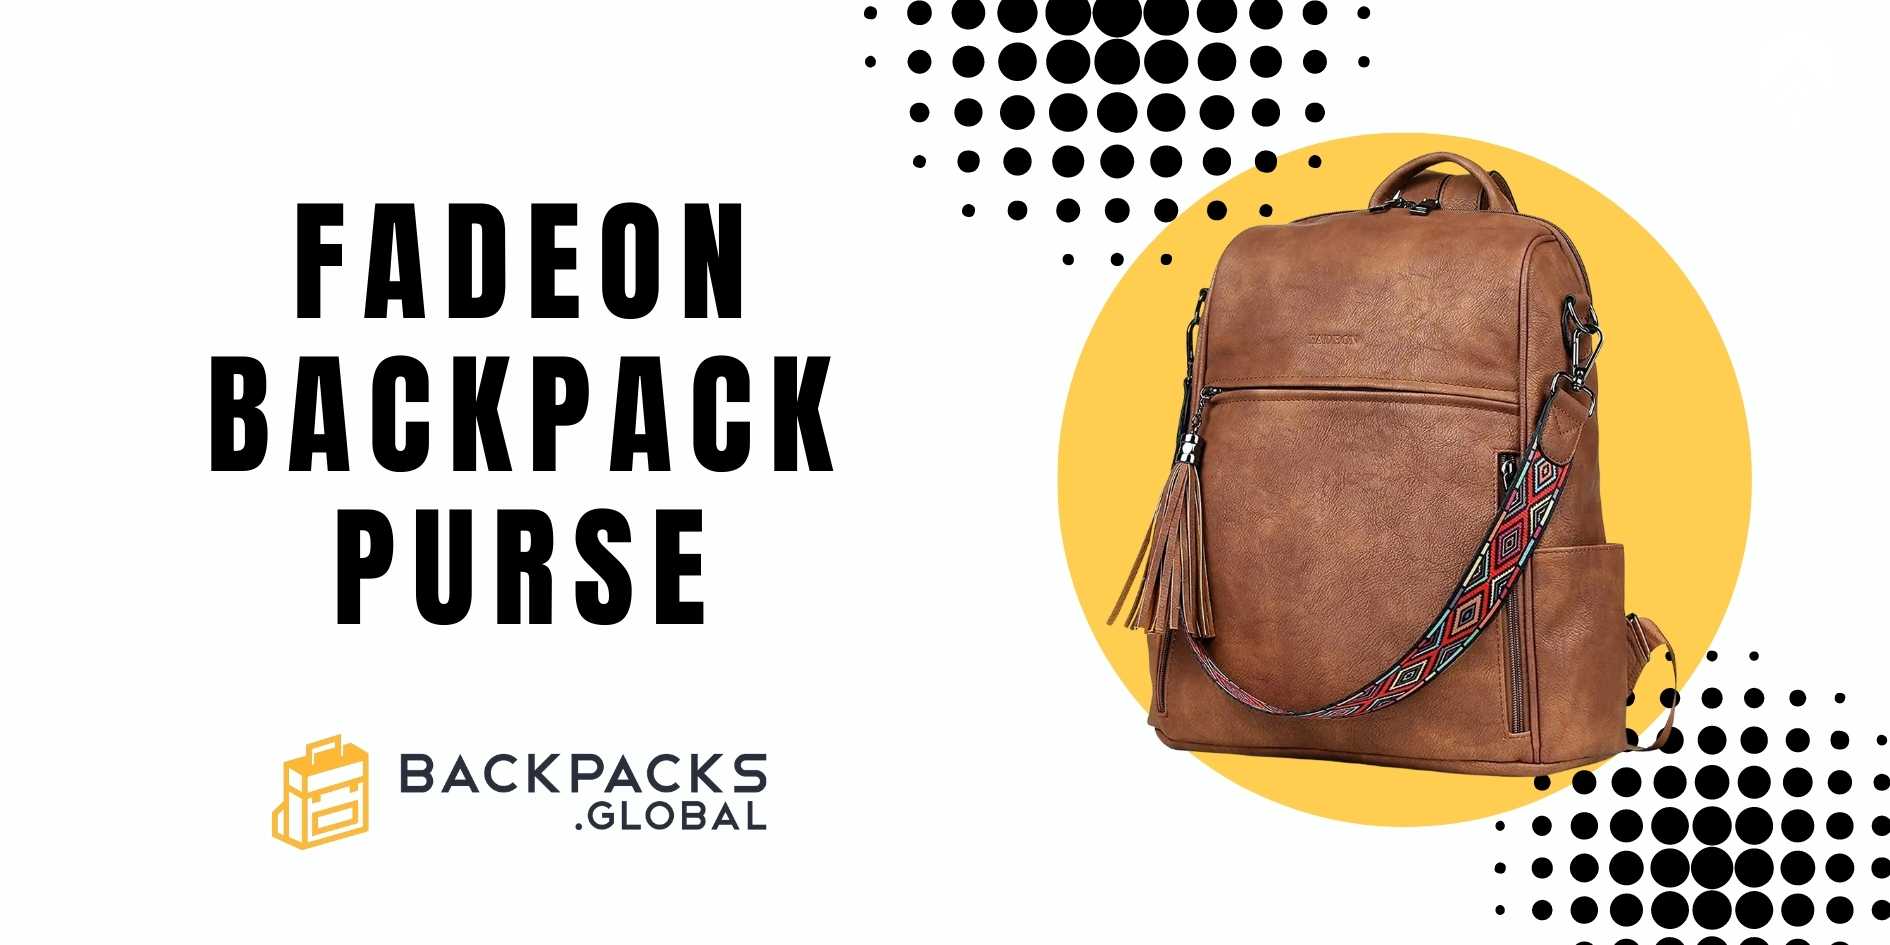 Fadeon Backpack Purse